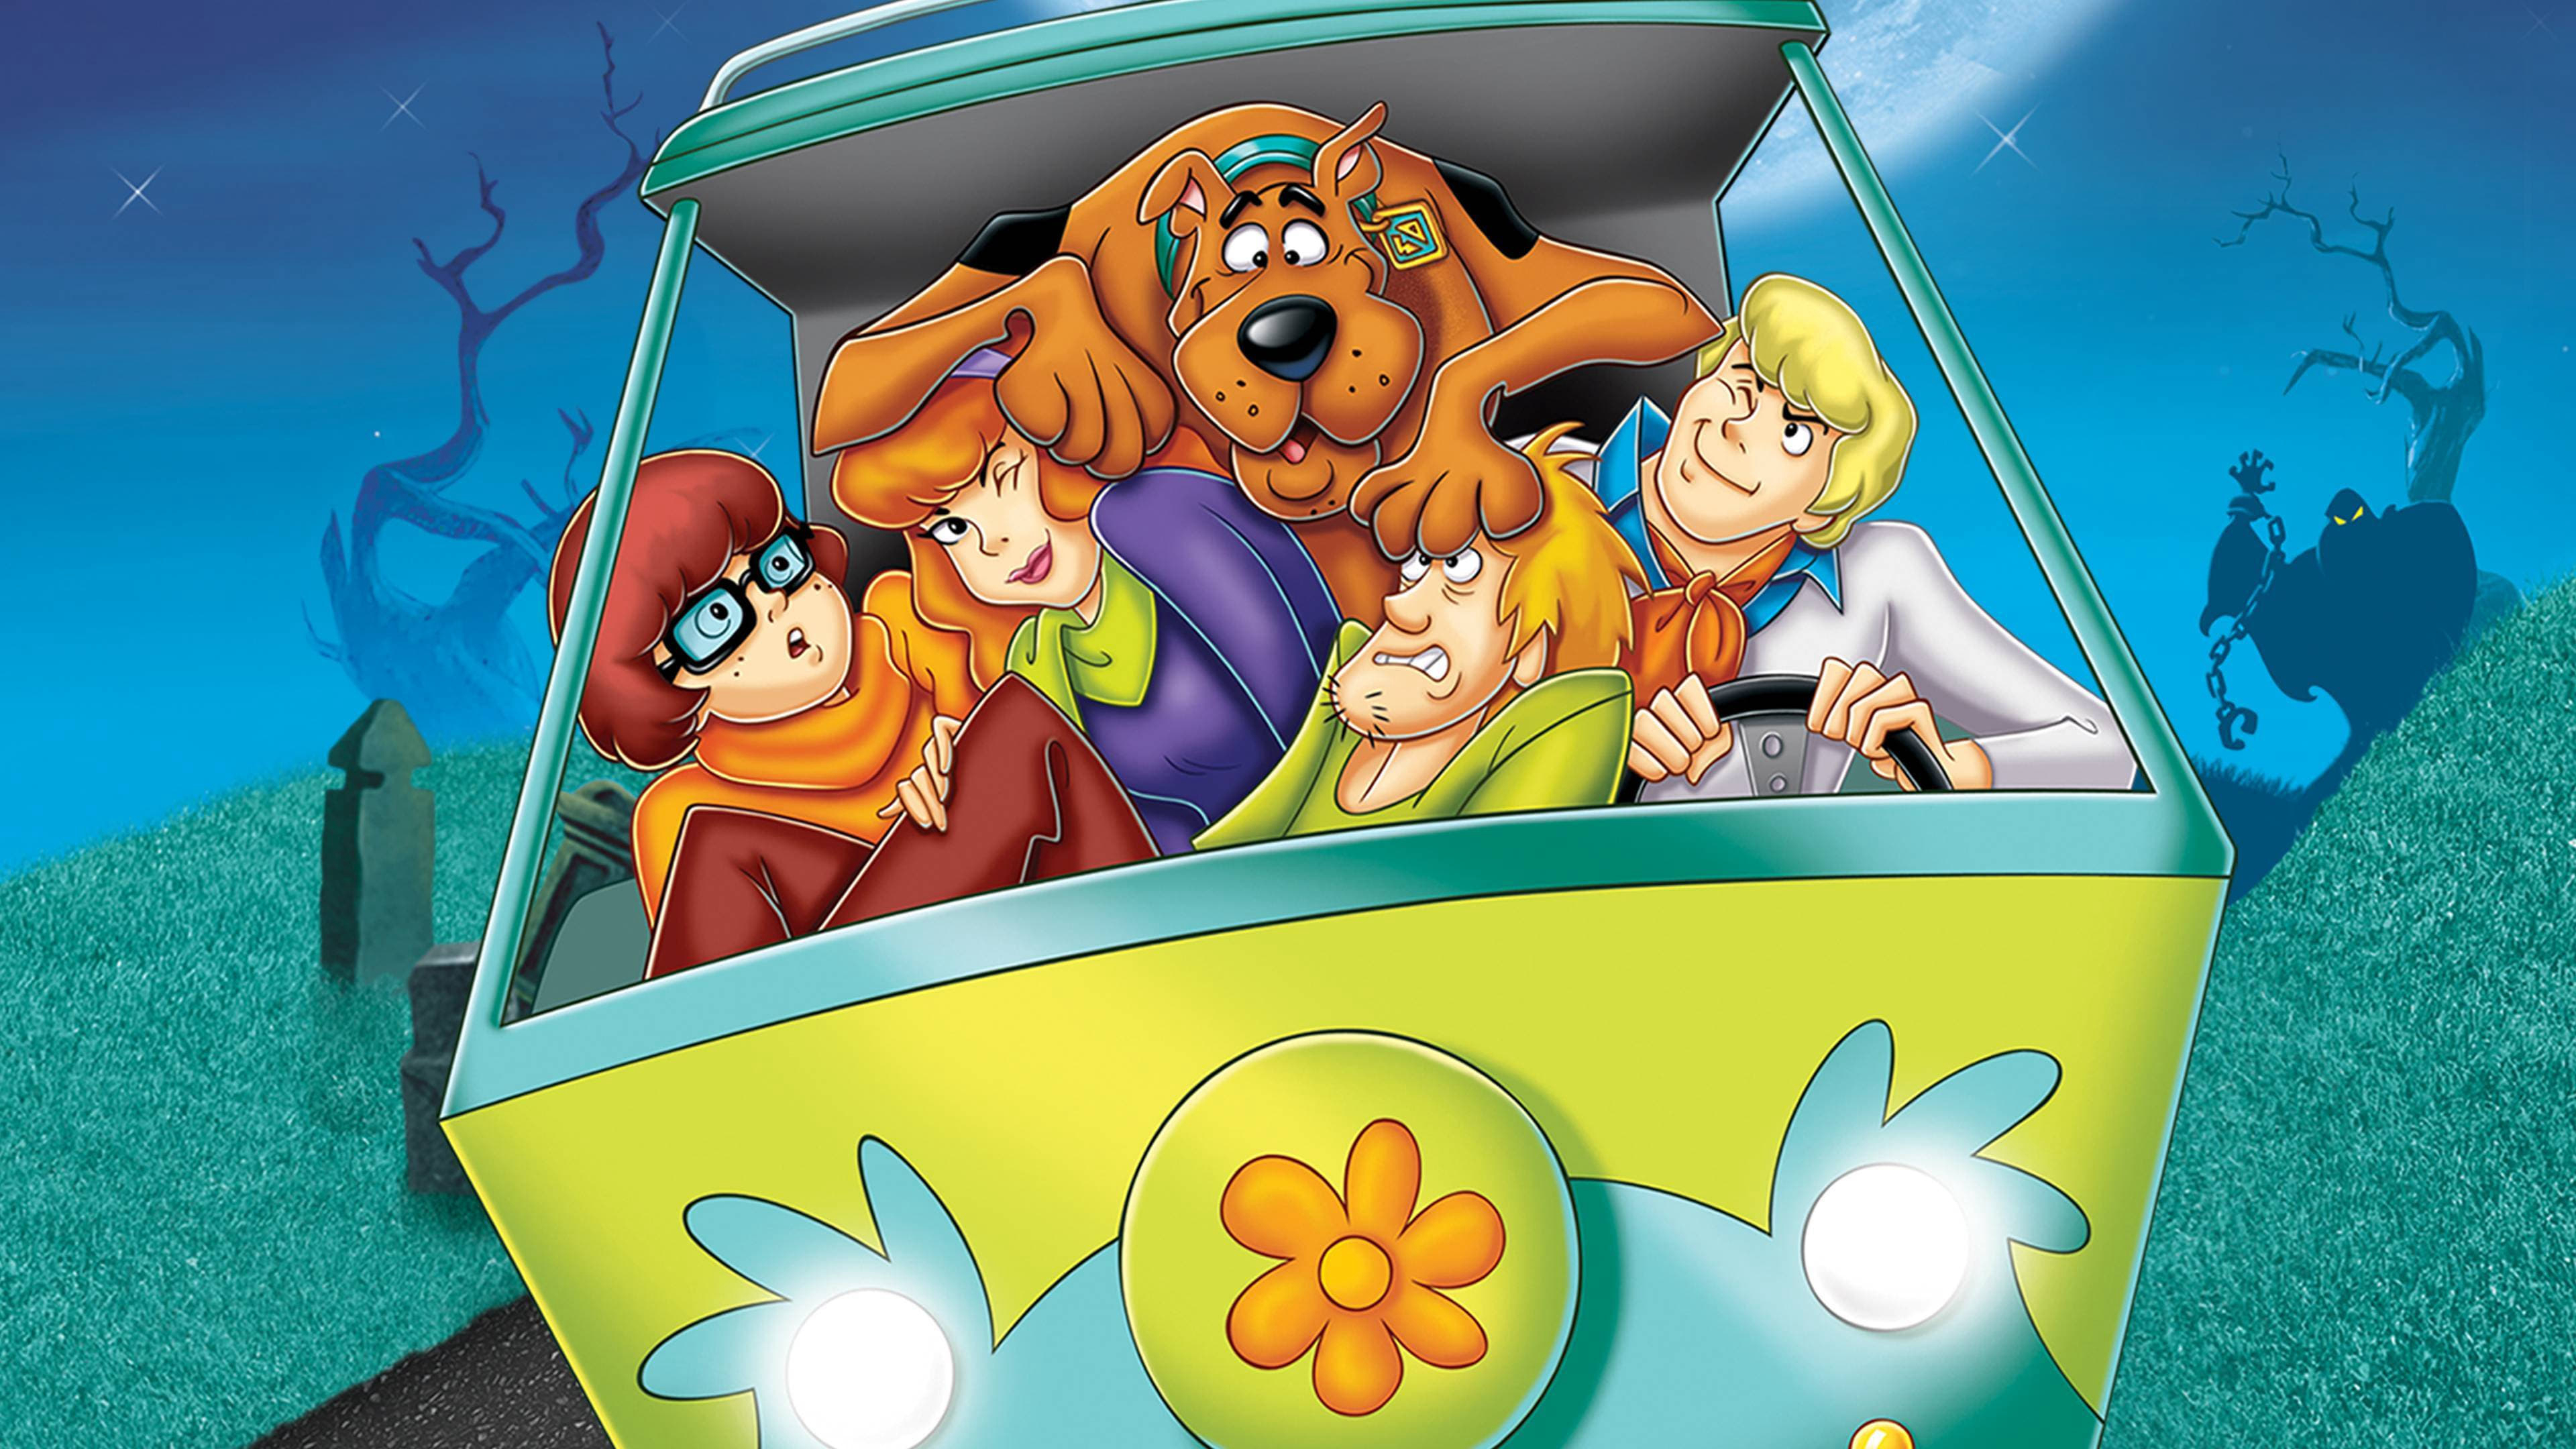 Scooby-Doo, Where Are You! (Phần 2) - Scooby-Doo, Where Are You! (Season 2)